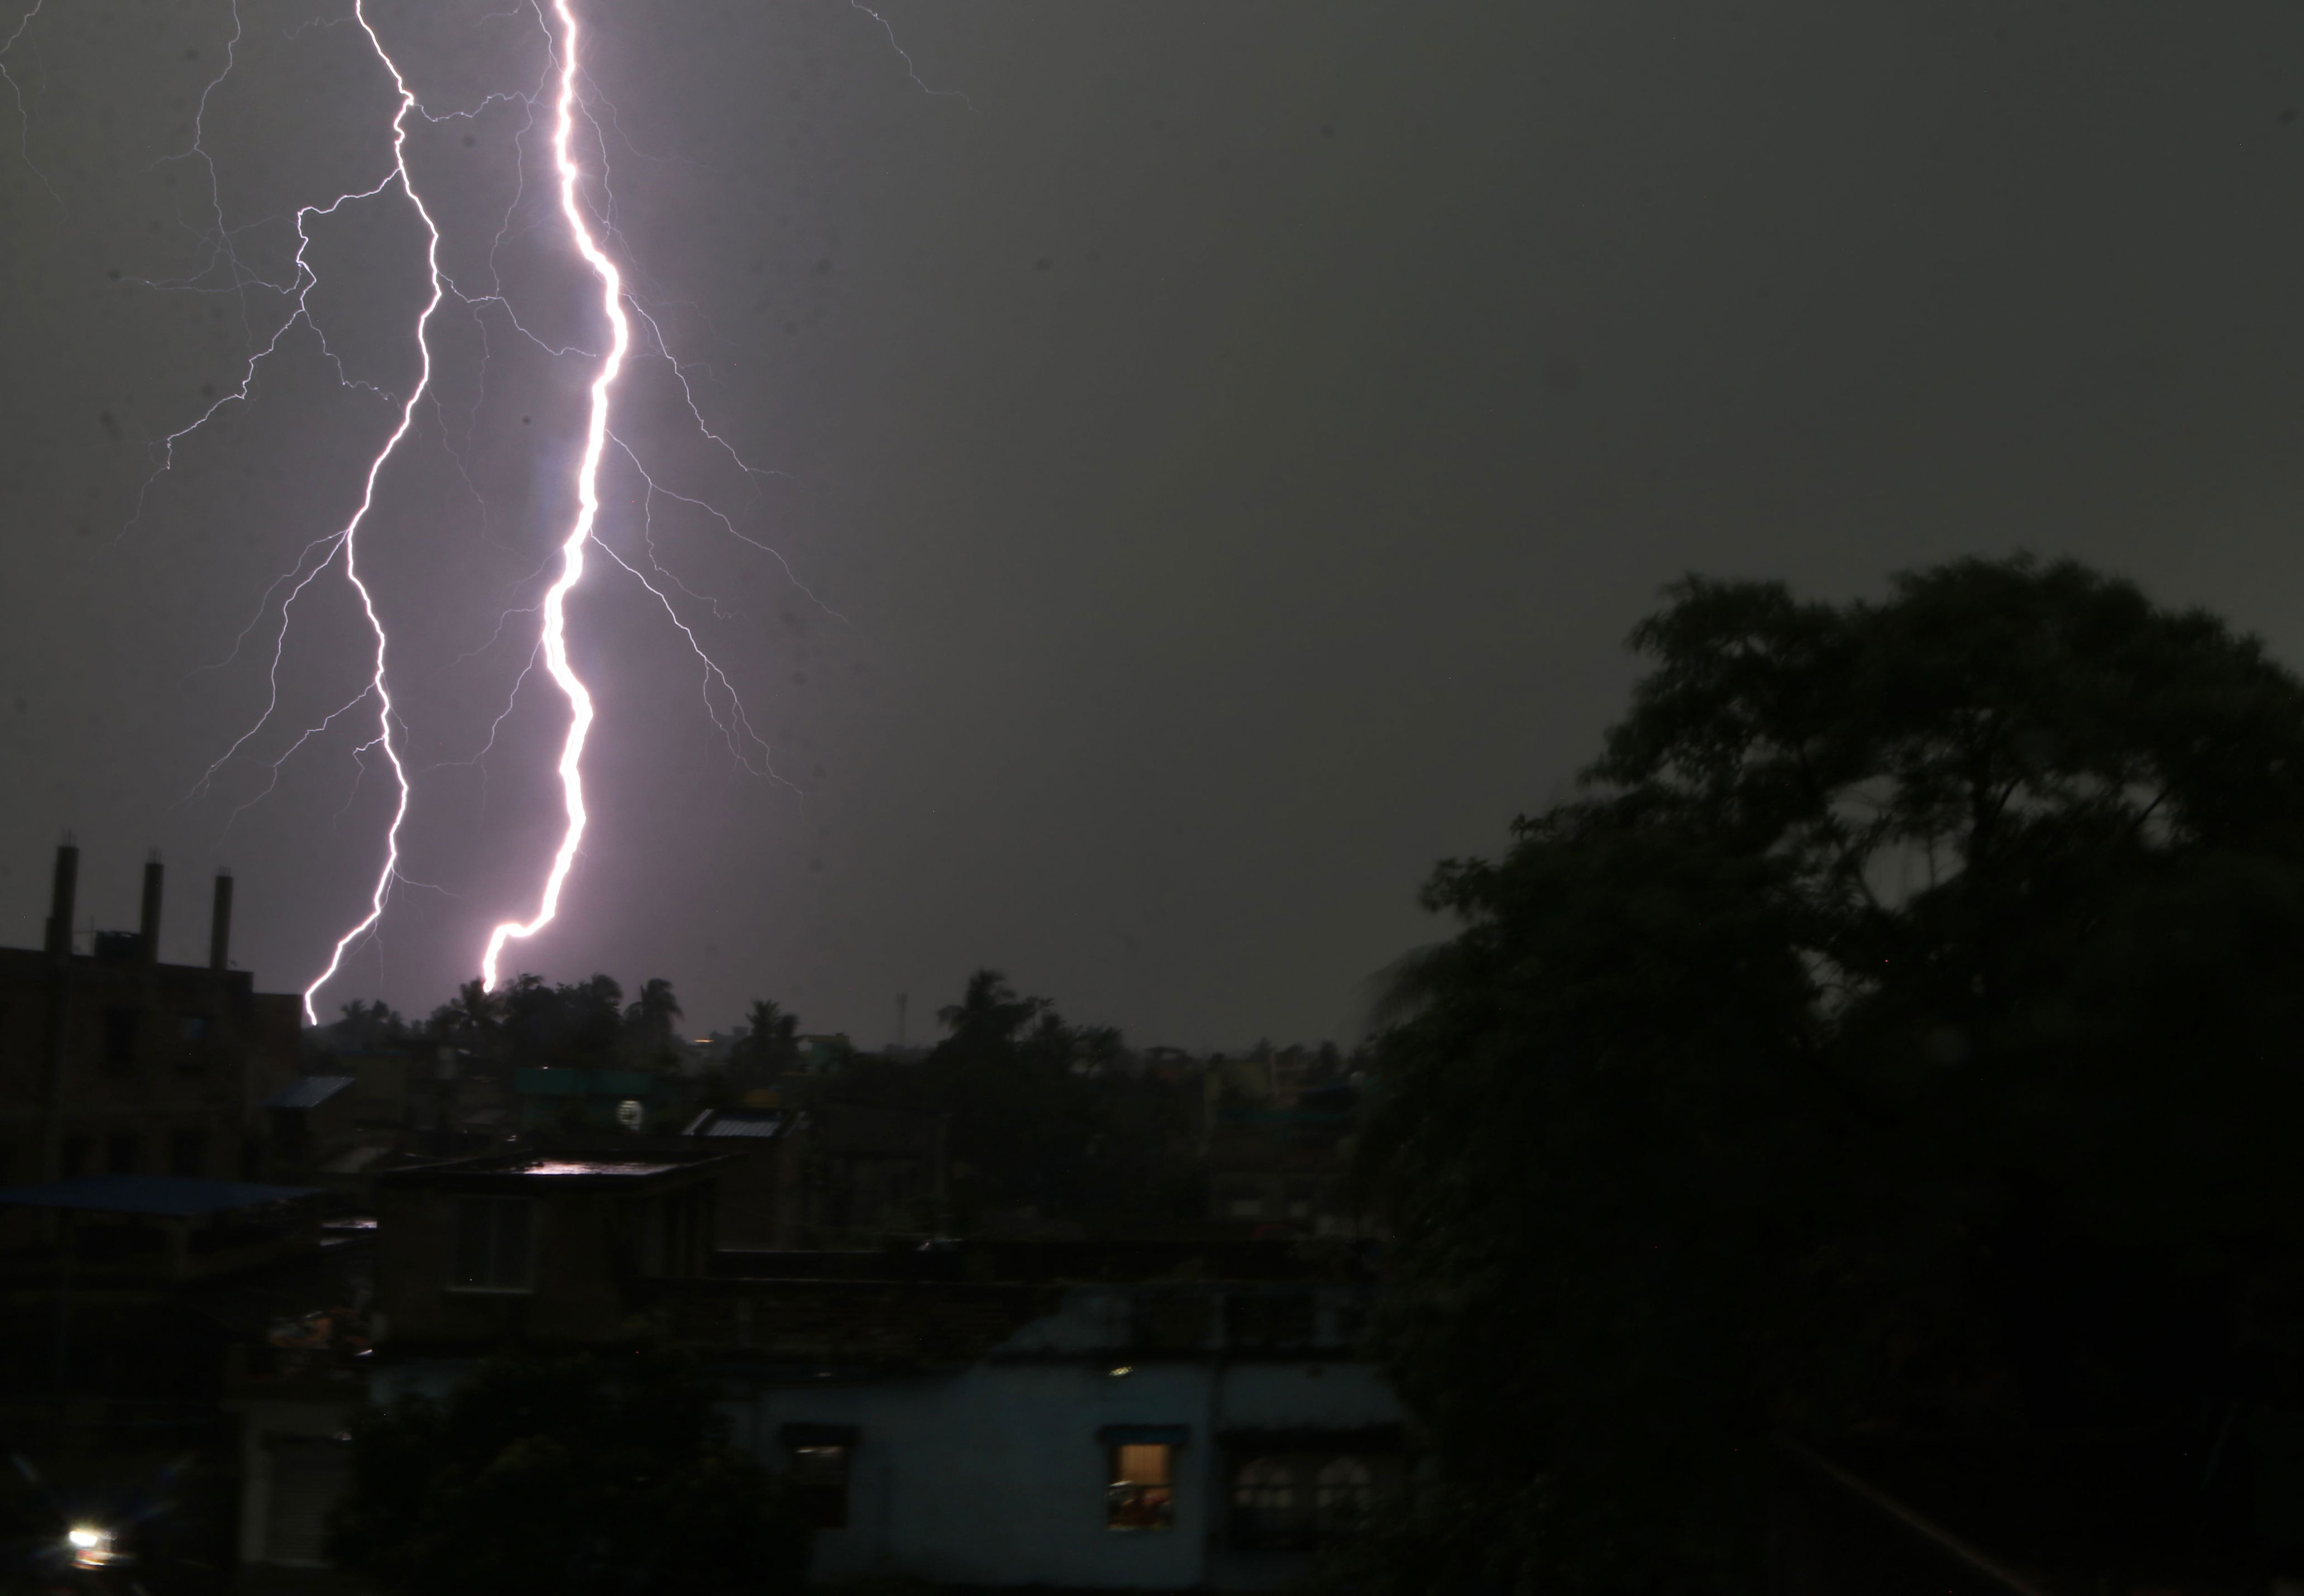 lightning kills 27 in one day in india's gujarat state